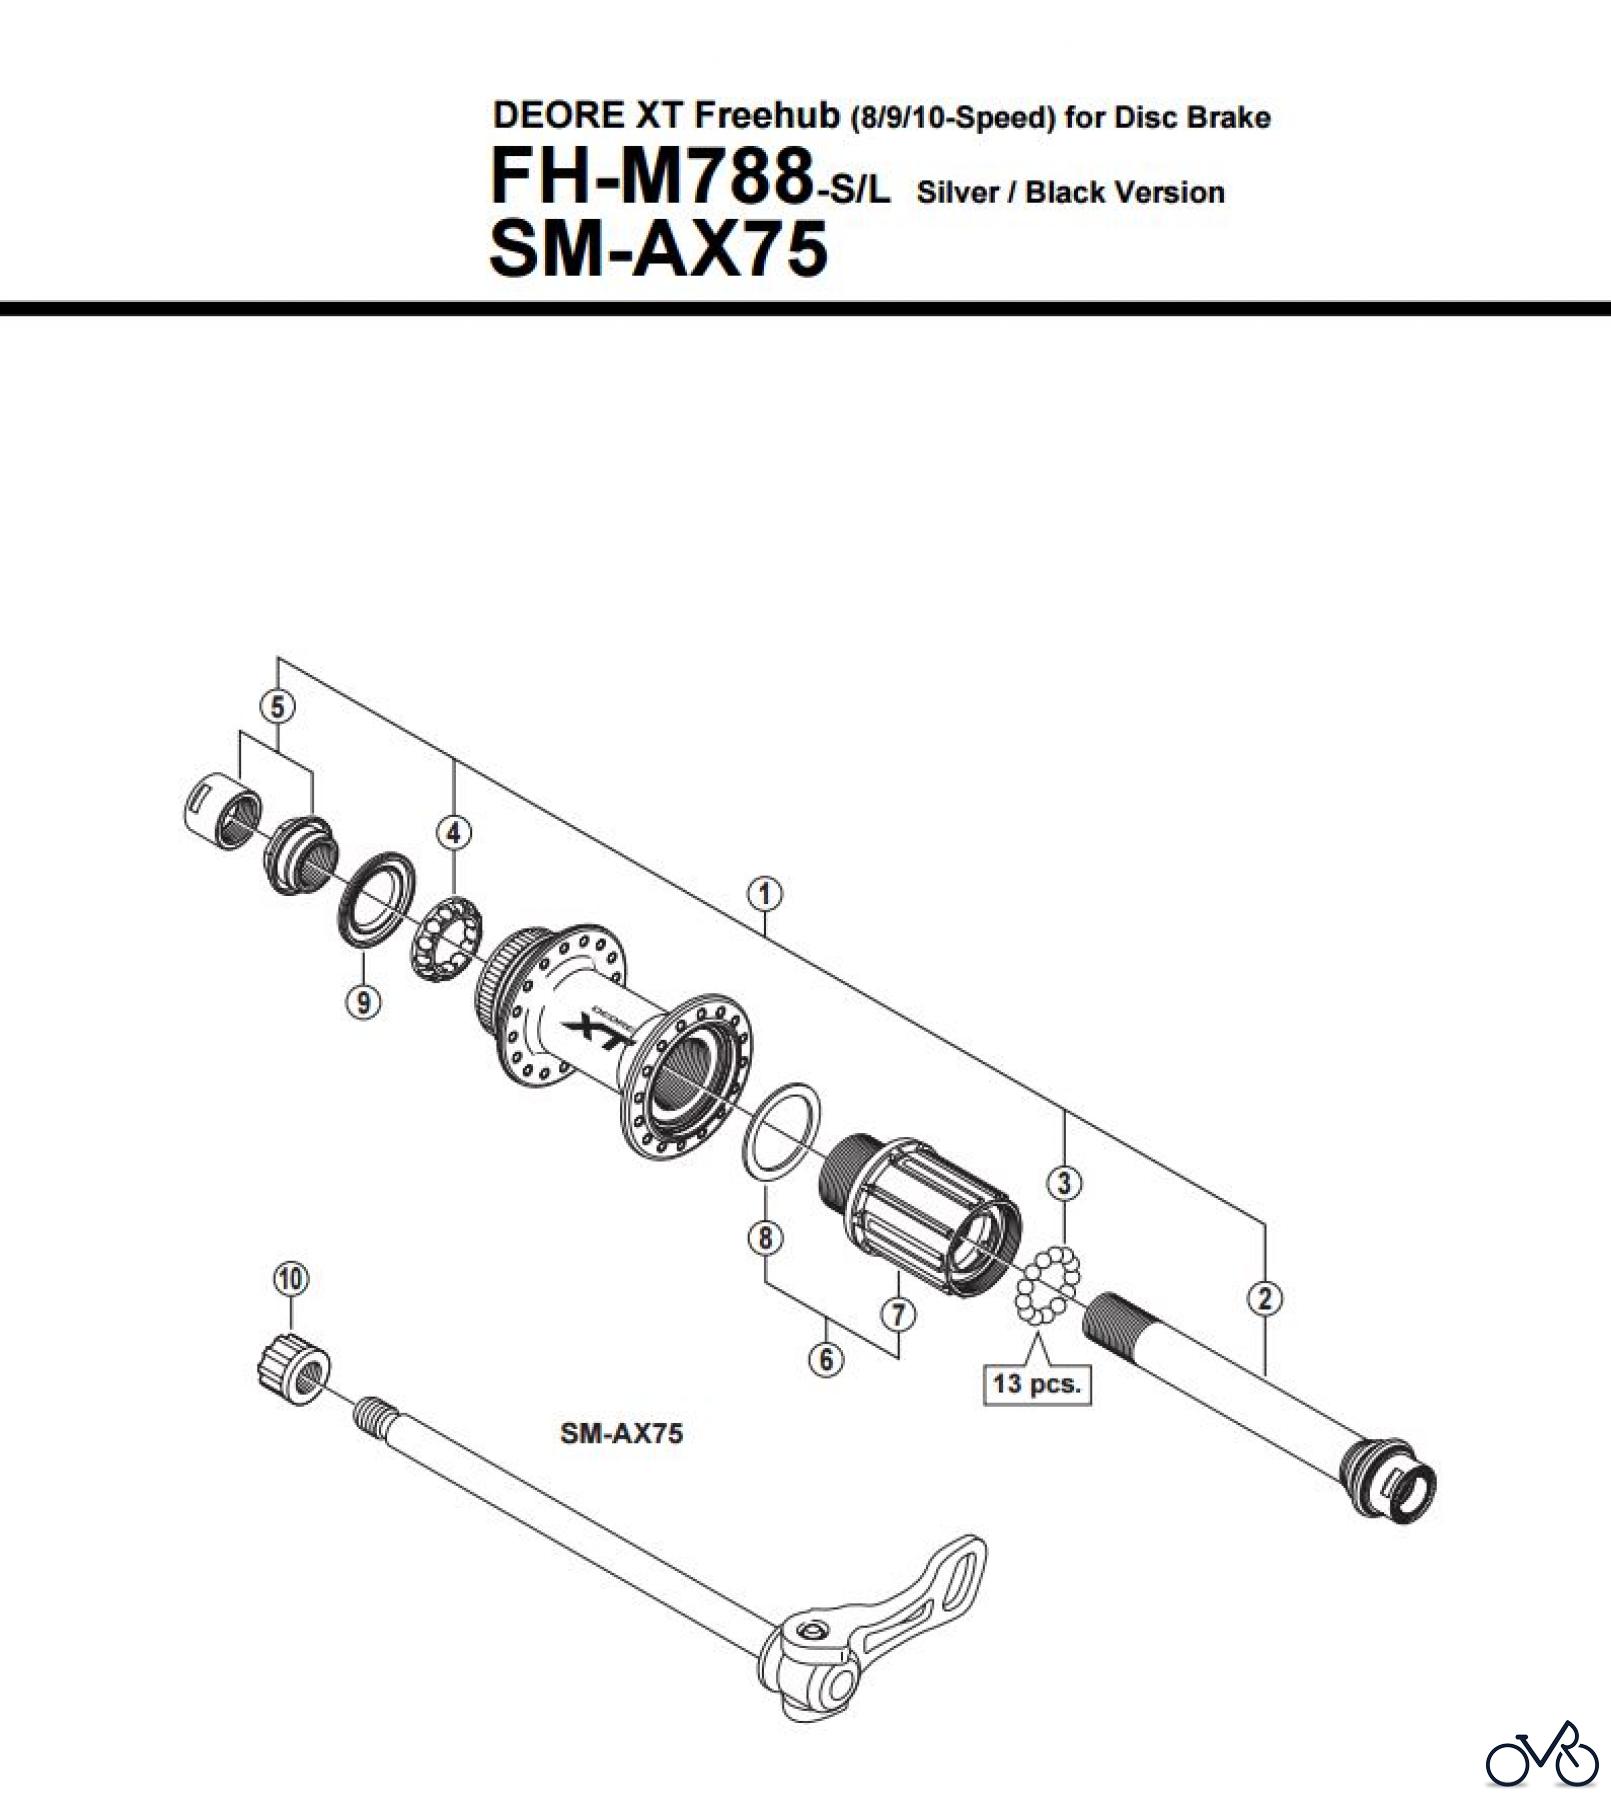  Shimano FH Free Hub - Freilaufnabe FH-M788  DEORE XT Freehub (8/9/10-Speed) for Disc Brake